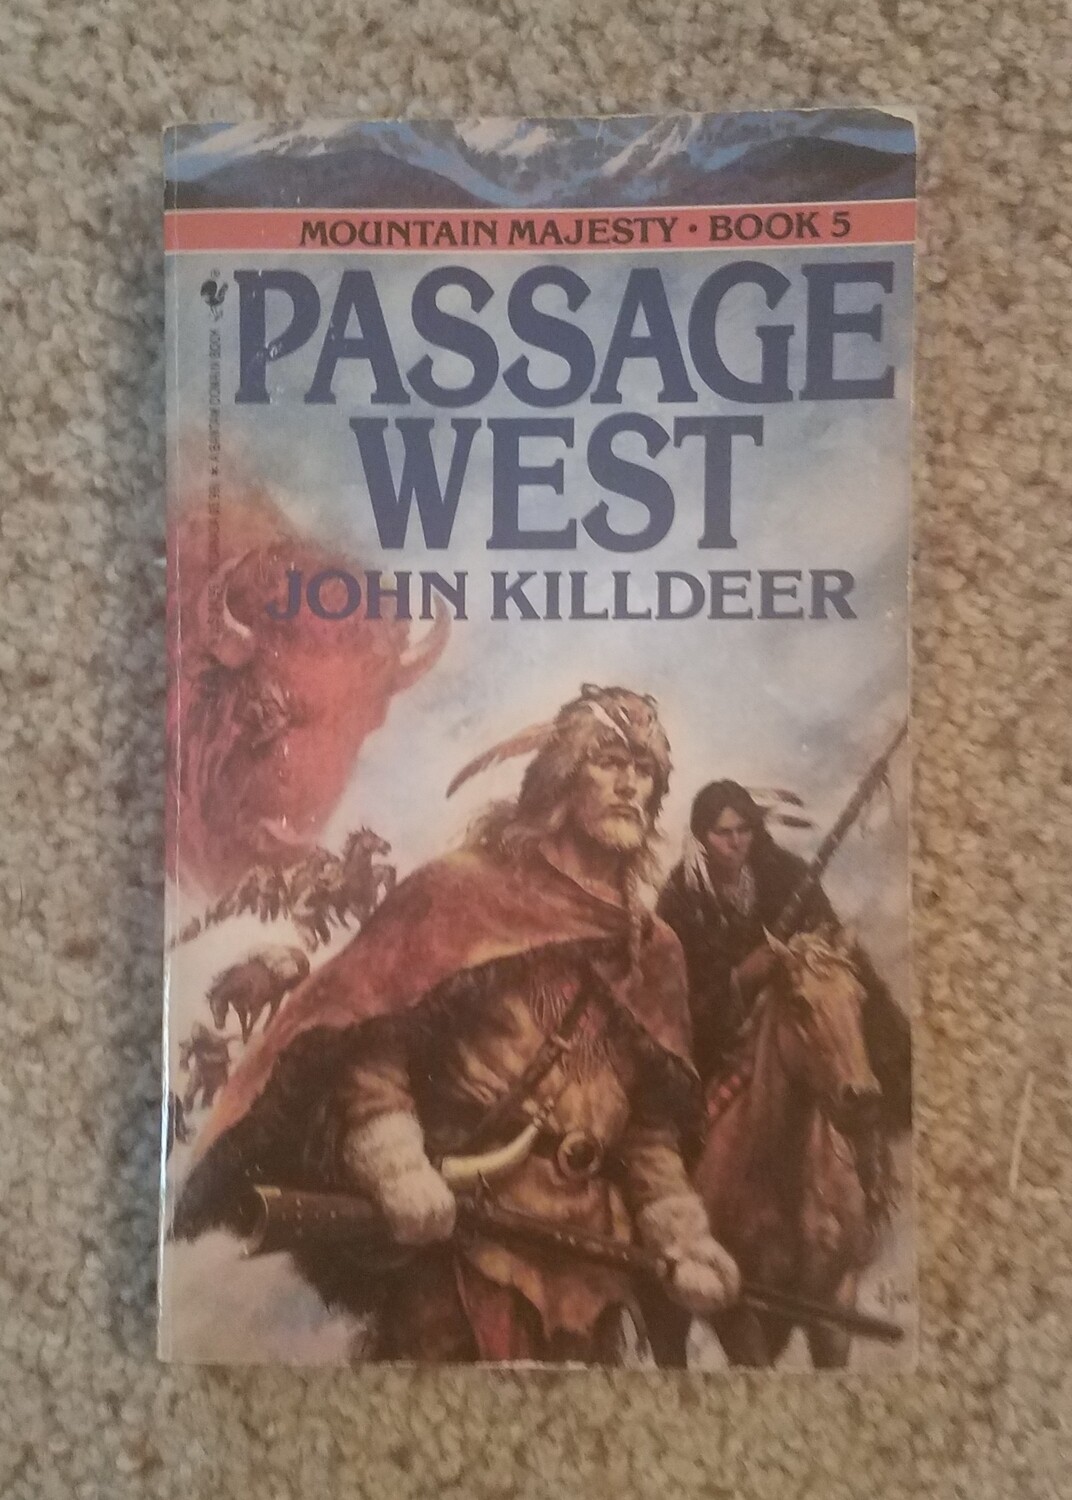 Passage West by John Killdeer